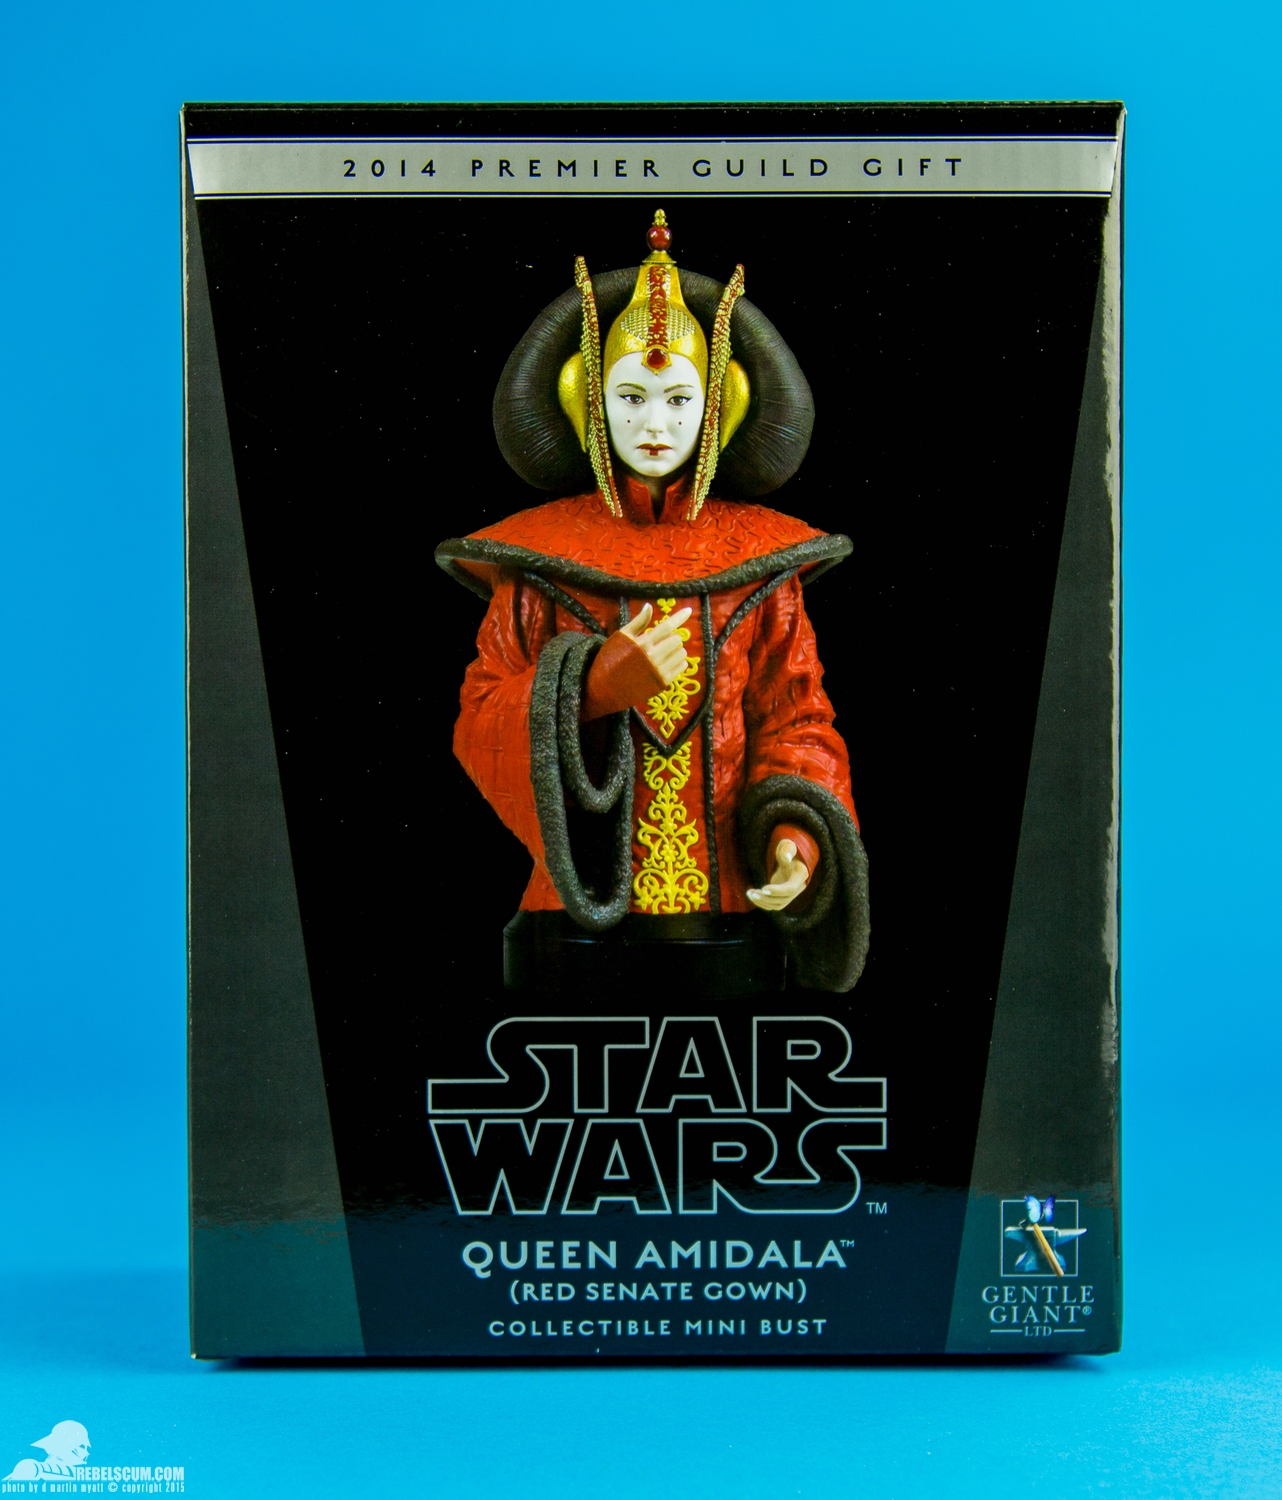 Queen-Amidala-Red-Senate-Gown-Mini-Bust-Gentle-Giant-013.jpg